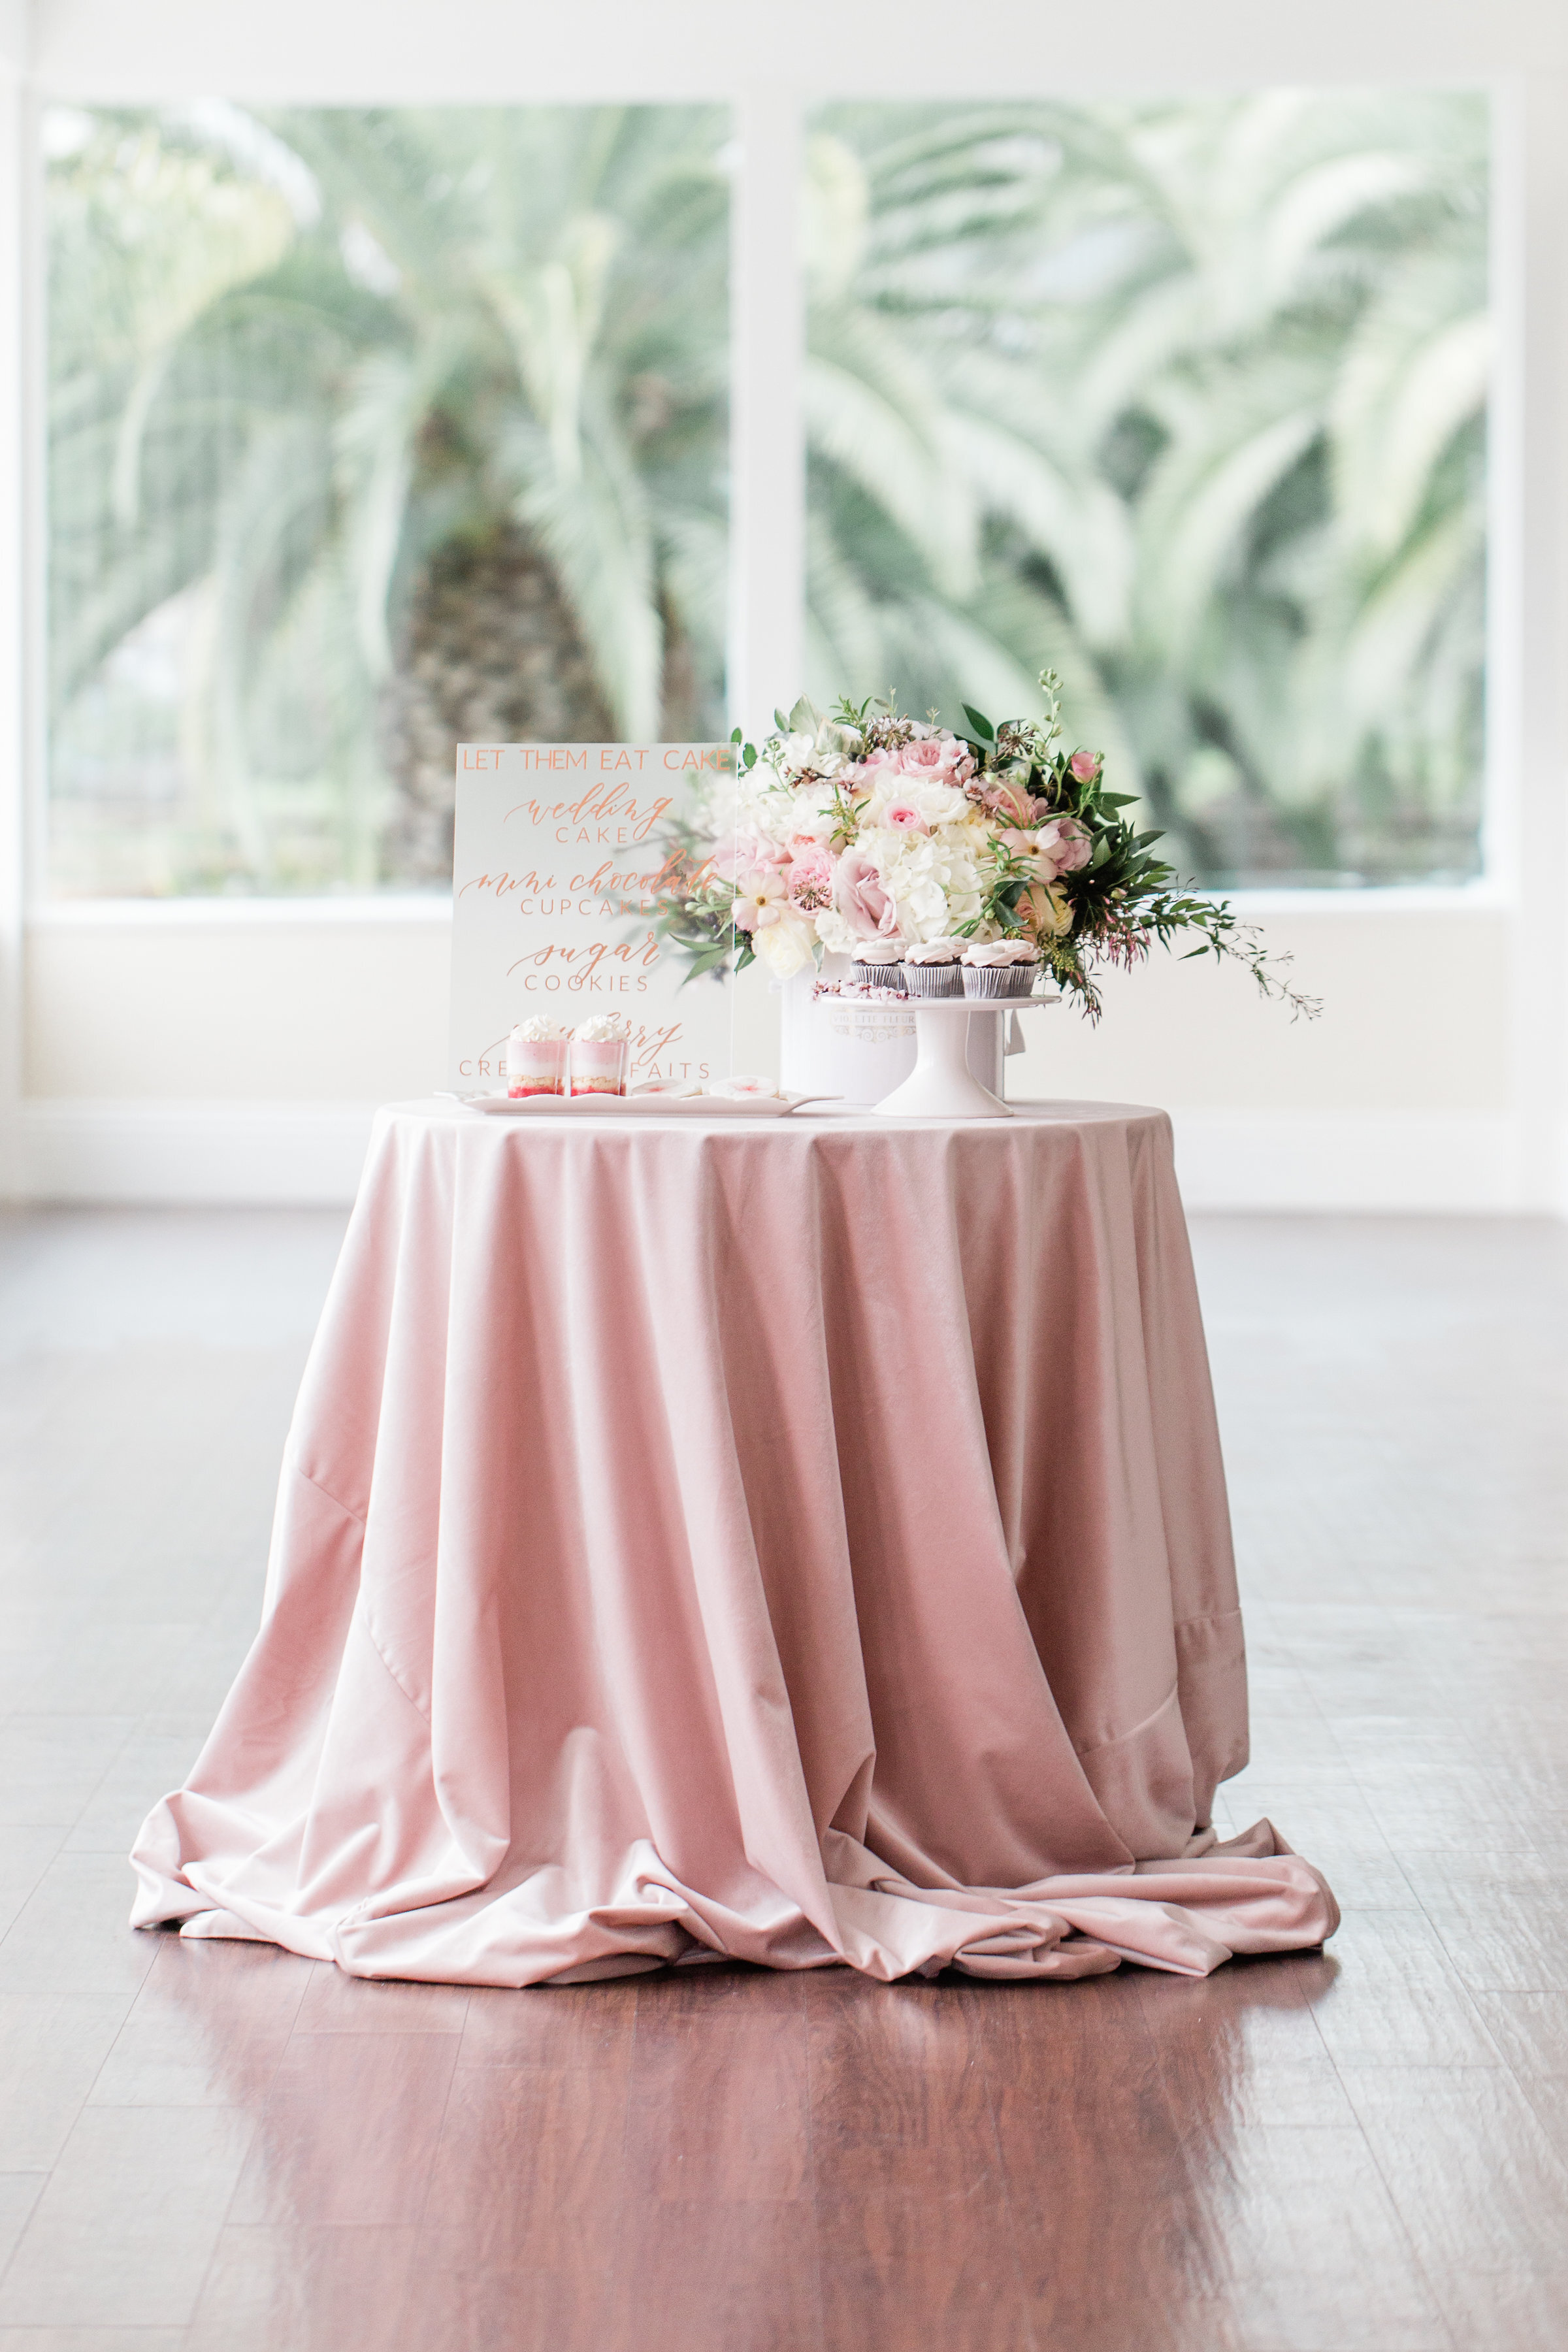 Violette-fleurs-event-design-florist-roseville-ashley-baumgartner-photography-planner-Elegant-Wedding-Classic-velvet-blush-tablecloth.jpg